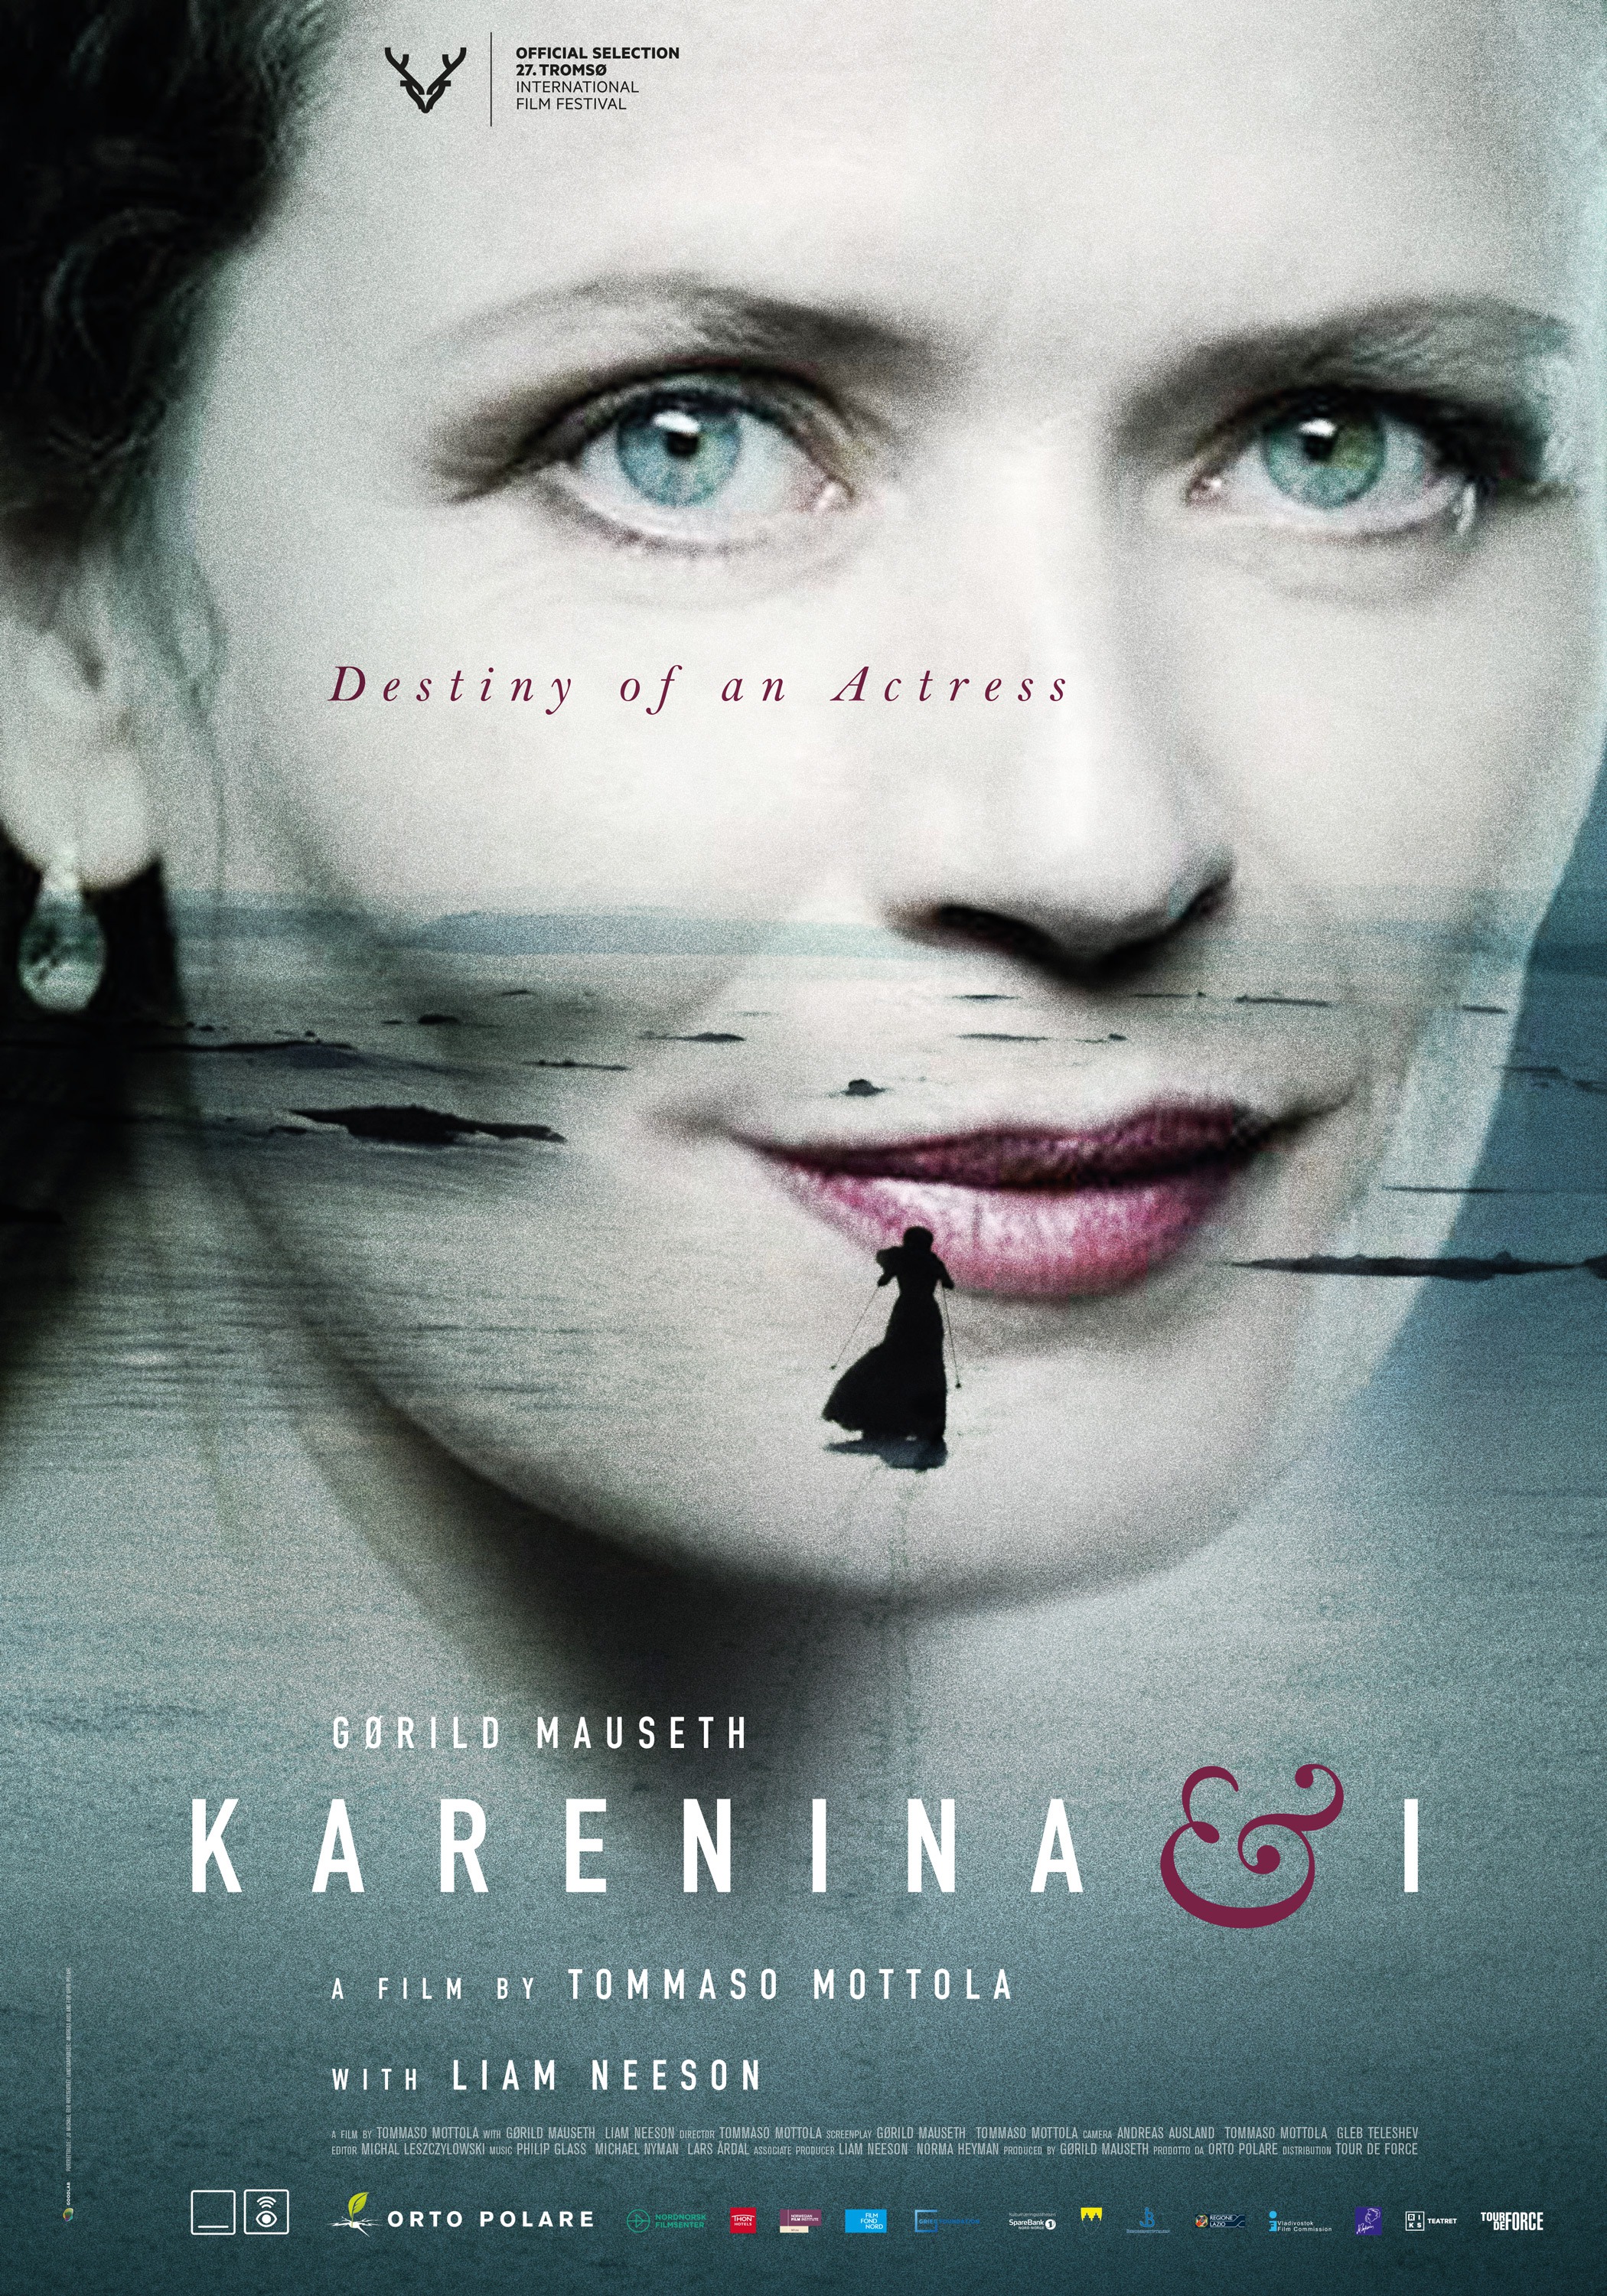 Mega Sized Movie Poster Image for Karenina & I 